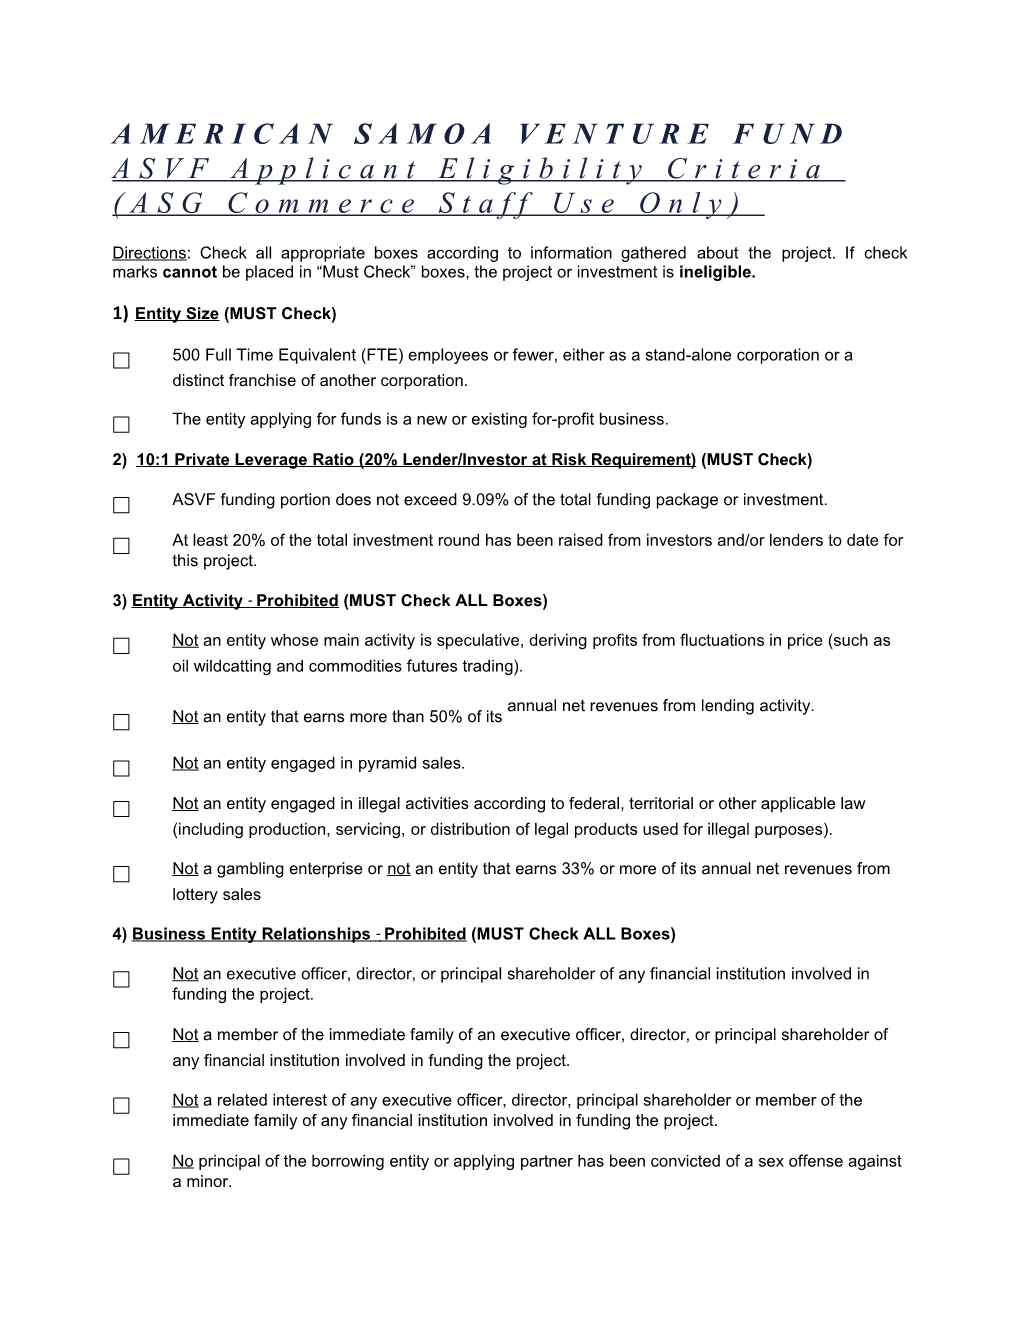 AMERICAN SAMOA VENTURE FUND ASVF Applicant Eligibility Criteria (ASG Commerce Staff Use Only)